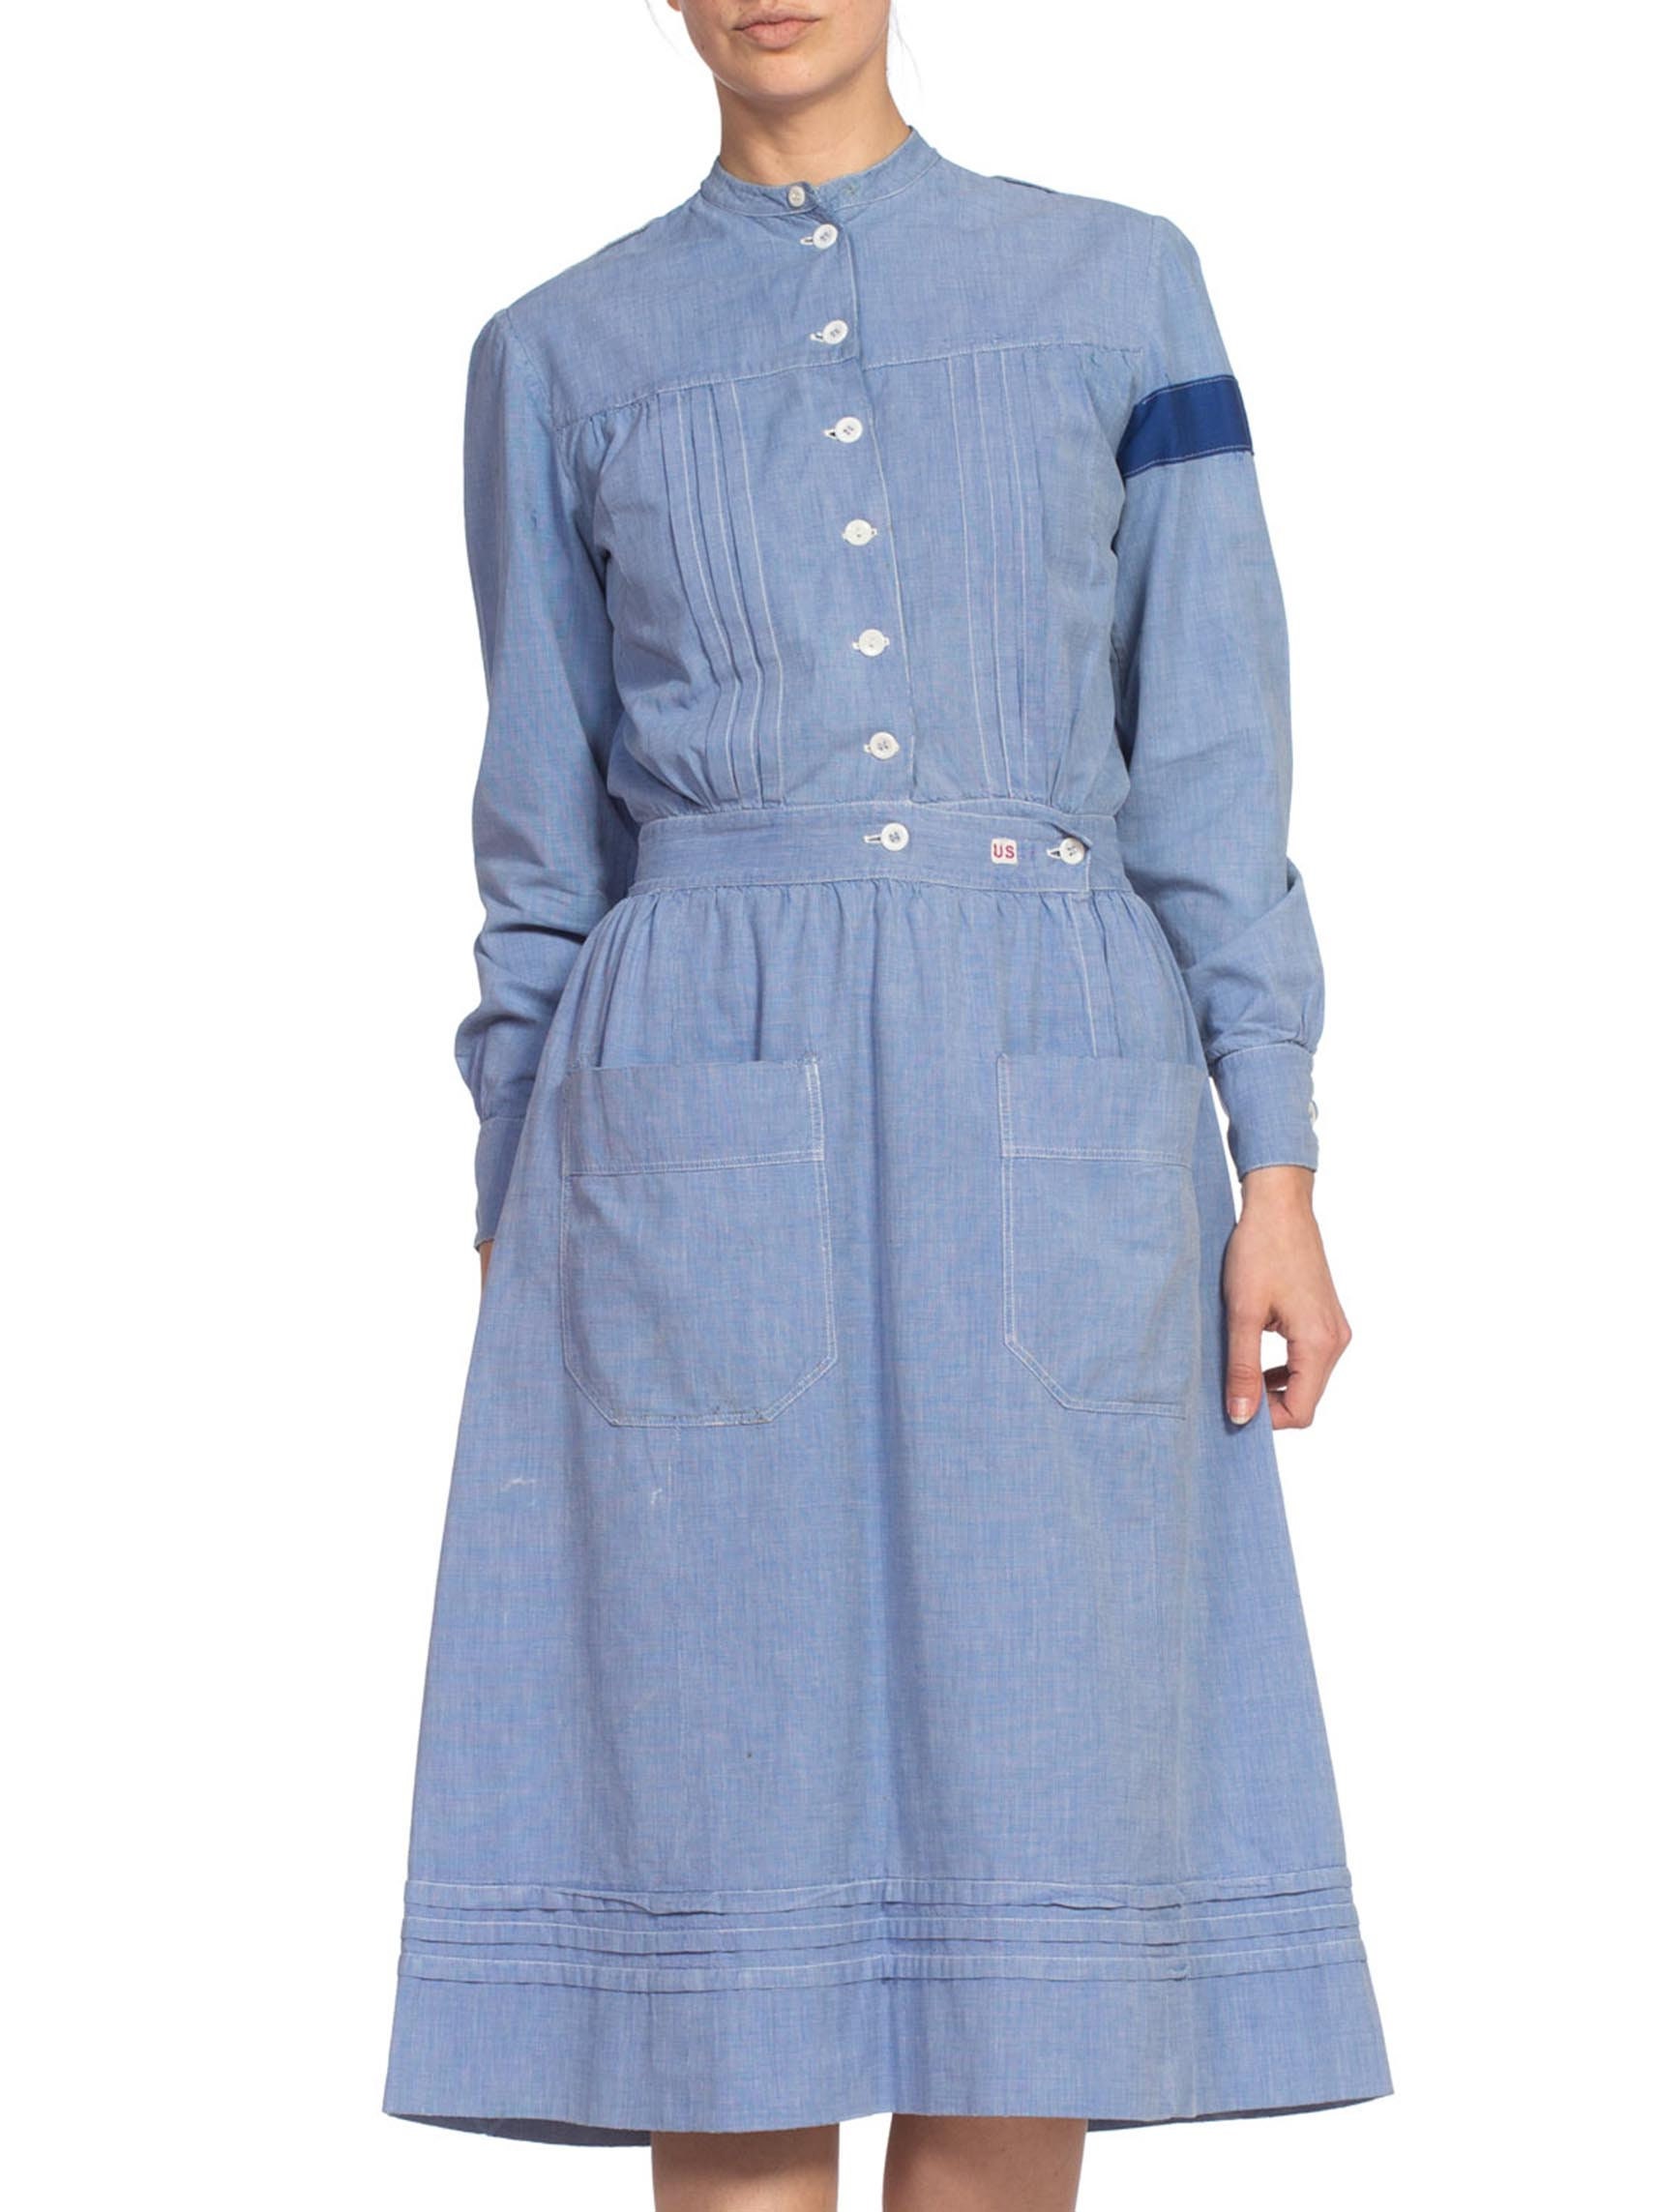 Edwardian Cotton Chambray WWI Authentic War Nurse Uniform - Etsy